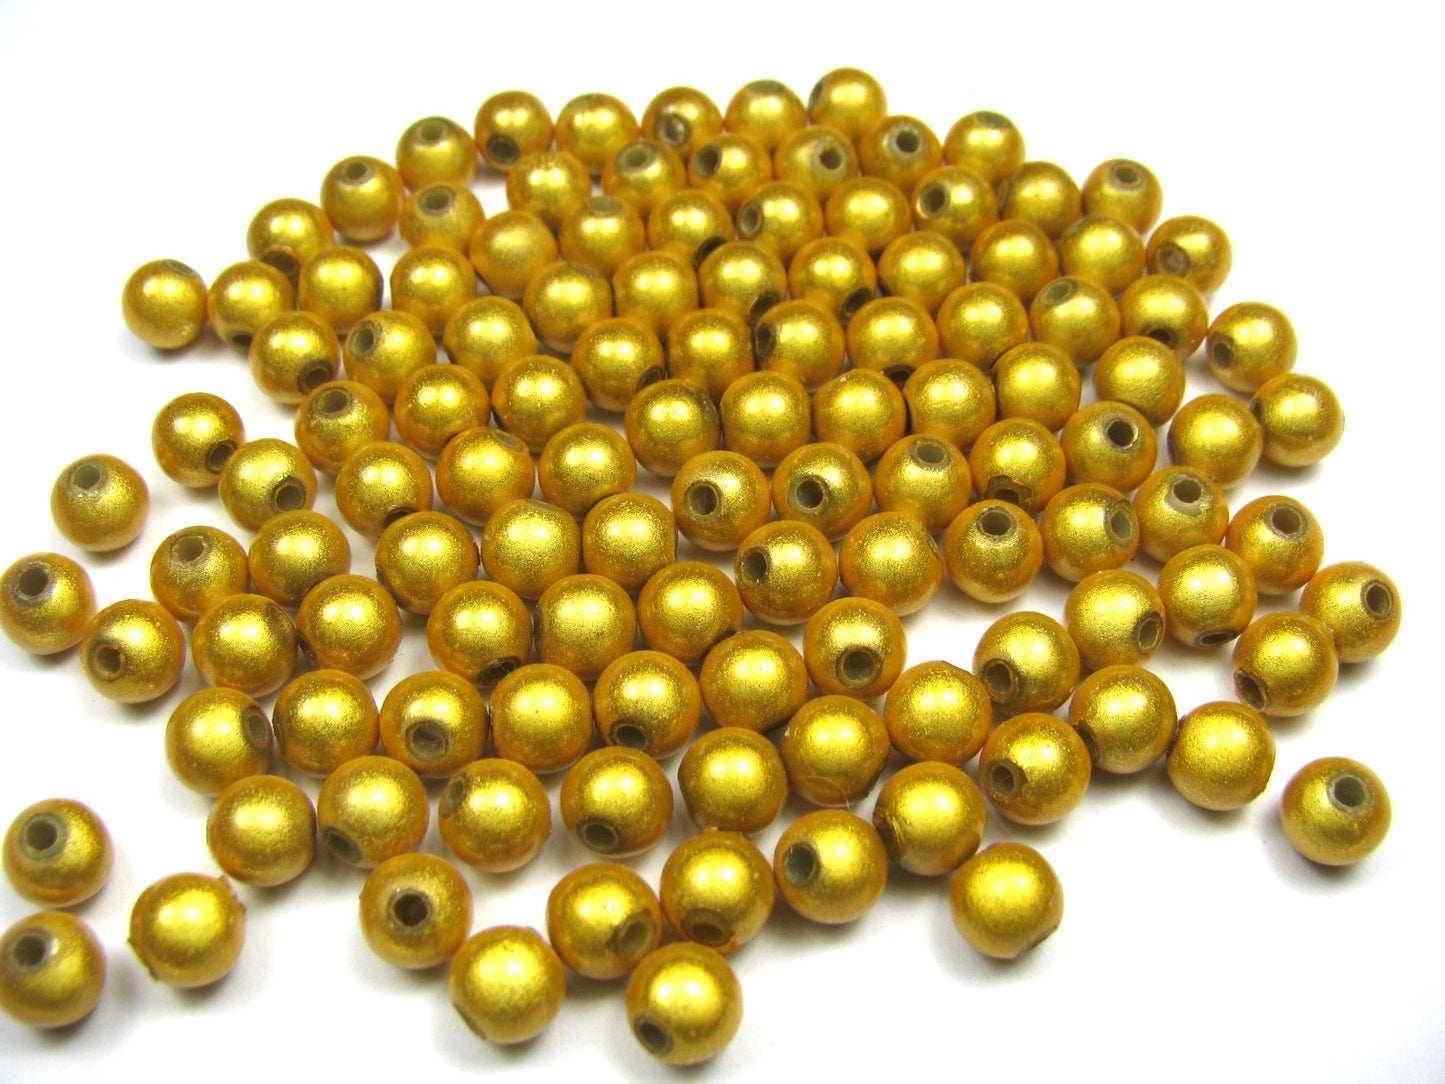 60, 120, 180 oder 300 Miracle Beads 6mm goldgelb Perlen basteln Schmuck machen